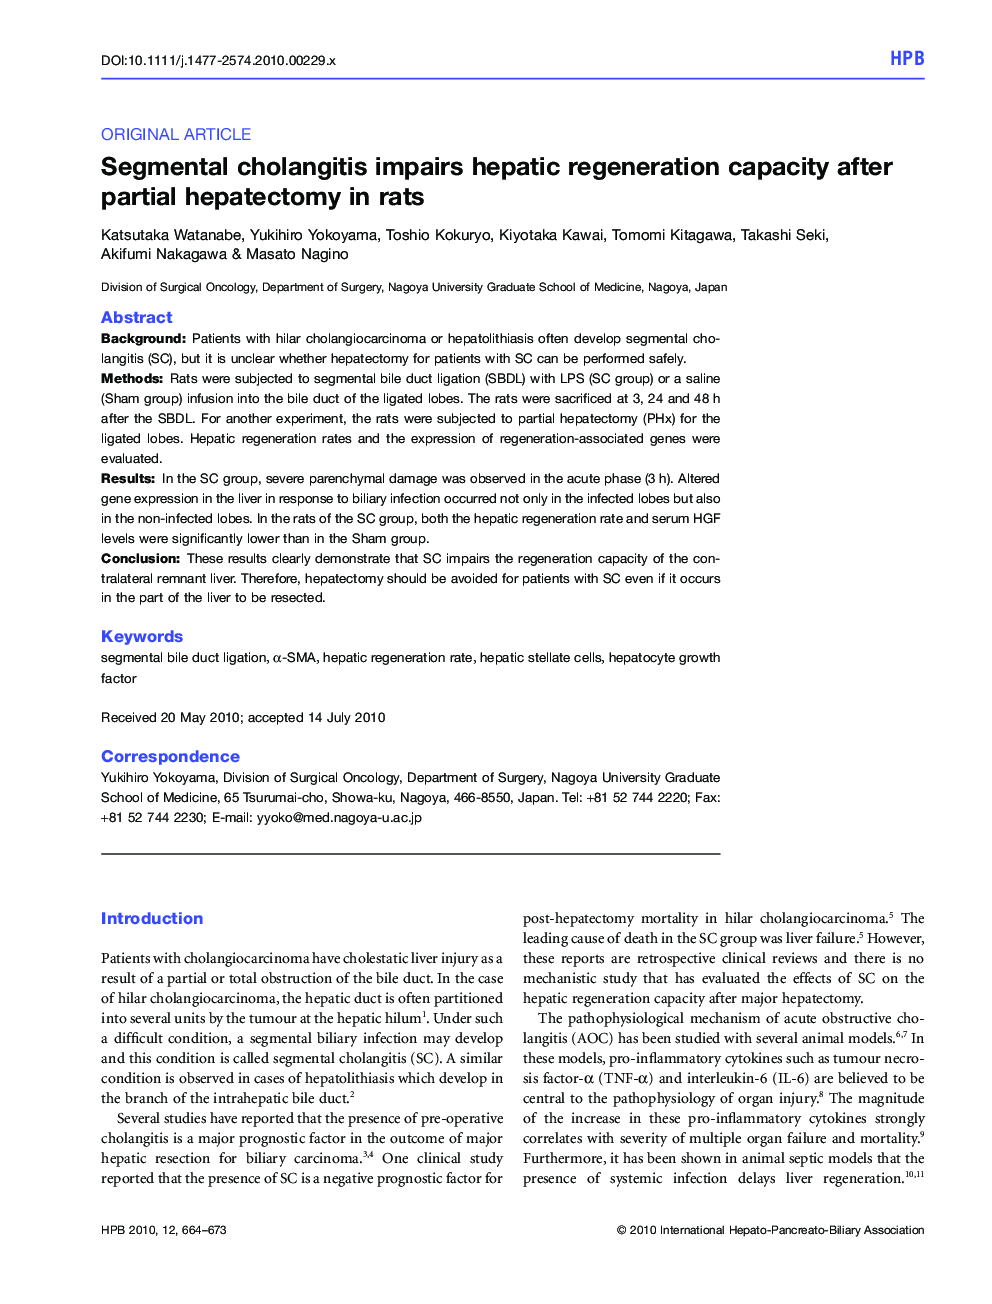 Segmental cholangitis impairs hepatic regeneration capacity after partial hepatectomy in rats